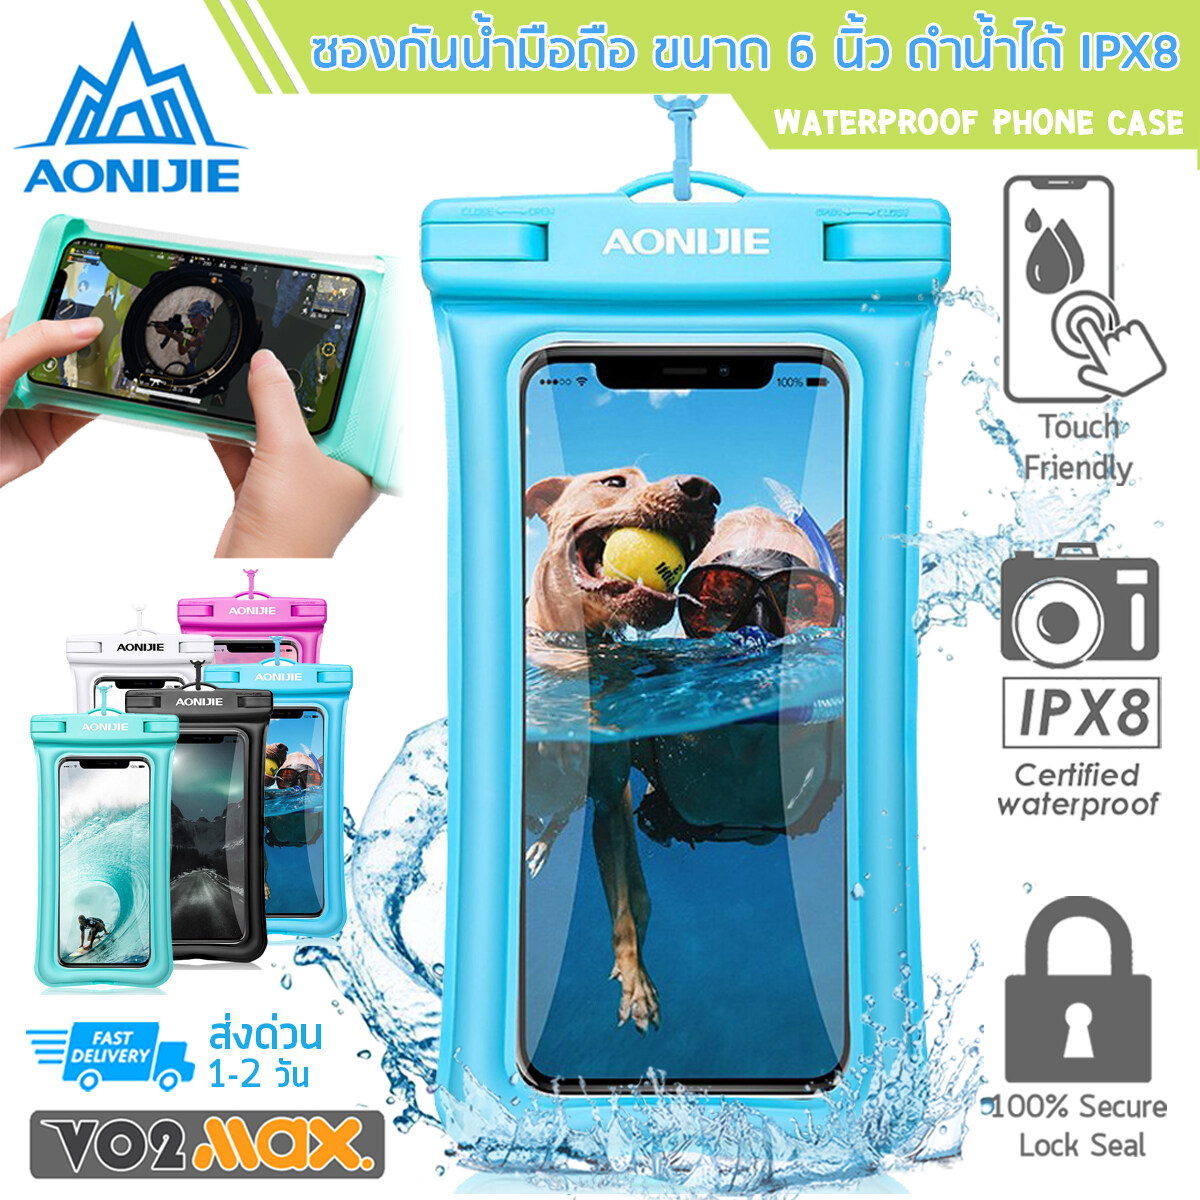 AONIJIE ซองกันน้ำ กระเป๋ากันน้ำ มือถือ Waterproof Phone Case มาตรฐาน IPX8 พร้อมสายคล้องคอ สำหรับขนาดหน้าจอ 6.5 นิ้ว สัมผัสหน้าจอได้ ถ่ายรูป VDO ใต้น้ำ ดำน้ำทะเล